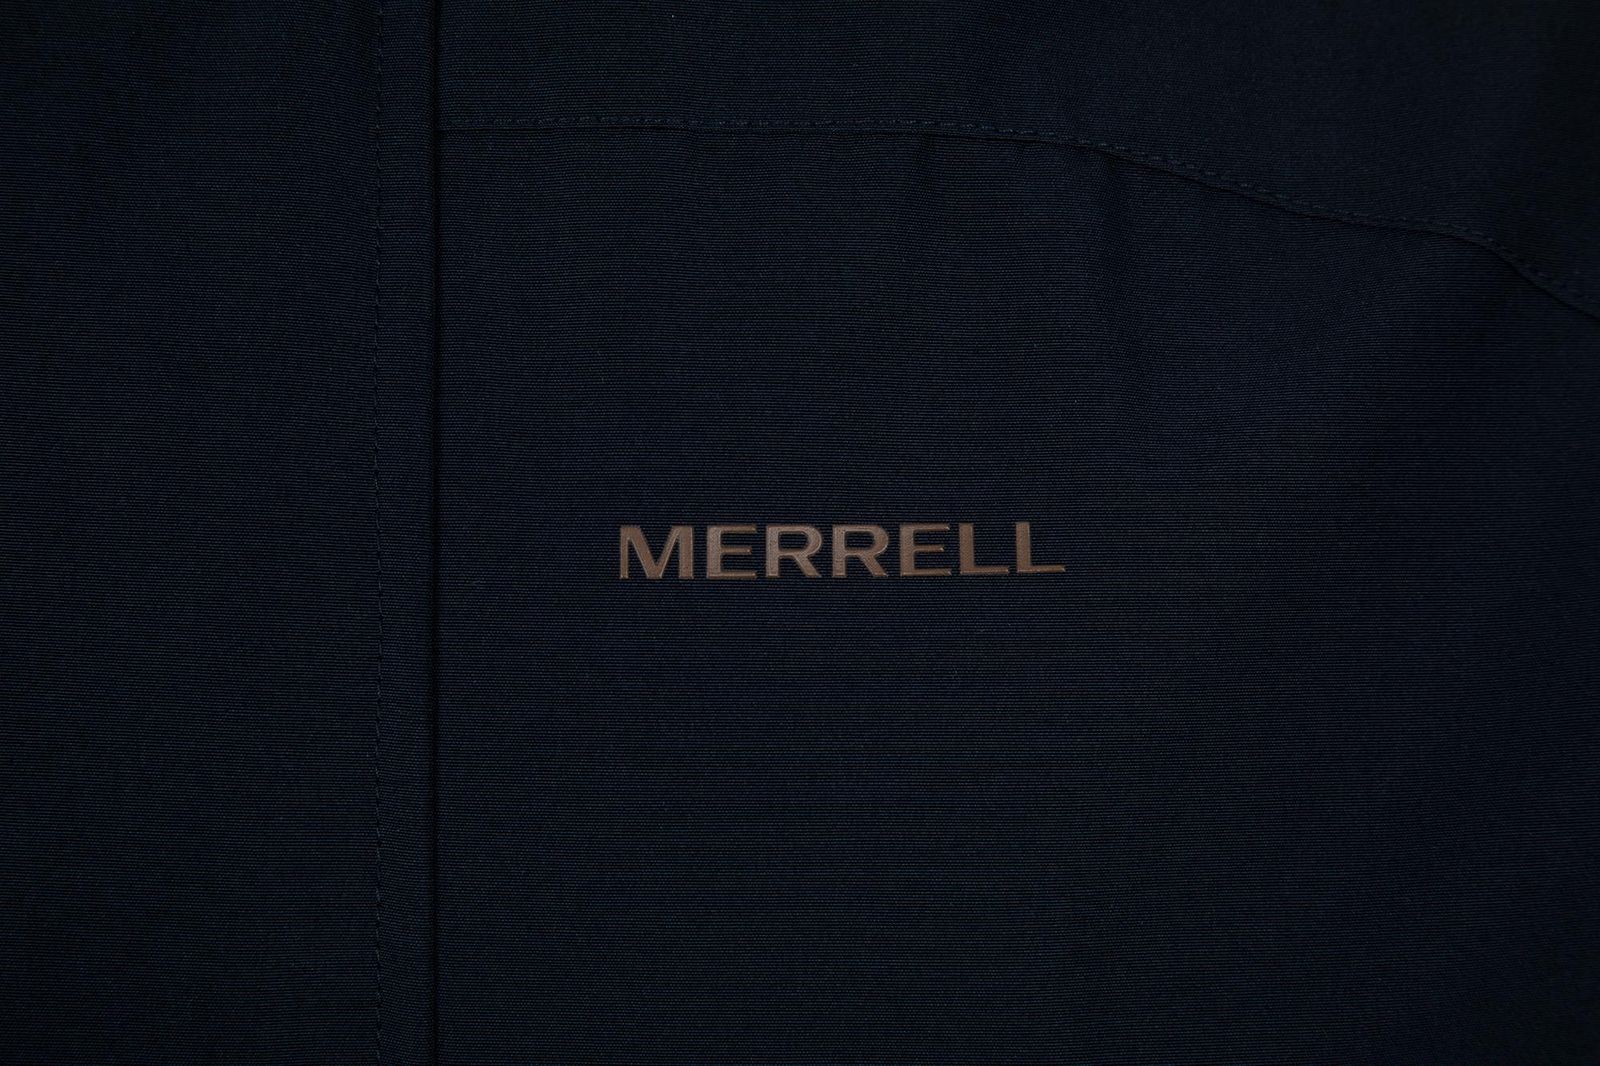   Merrell Men's Windbreaker, : -. S19AMRJAM09-Z4.  54